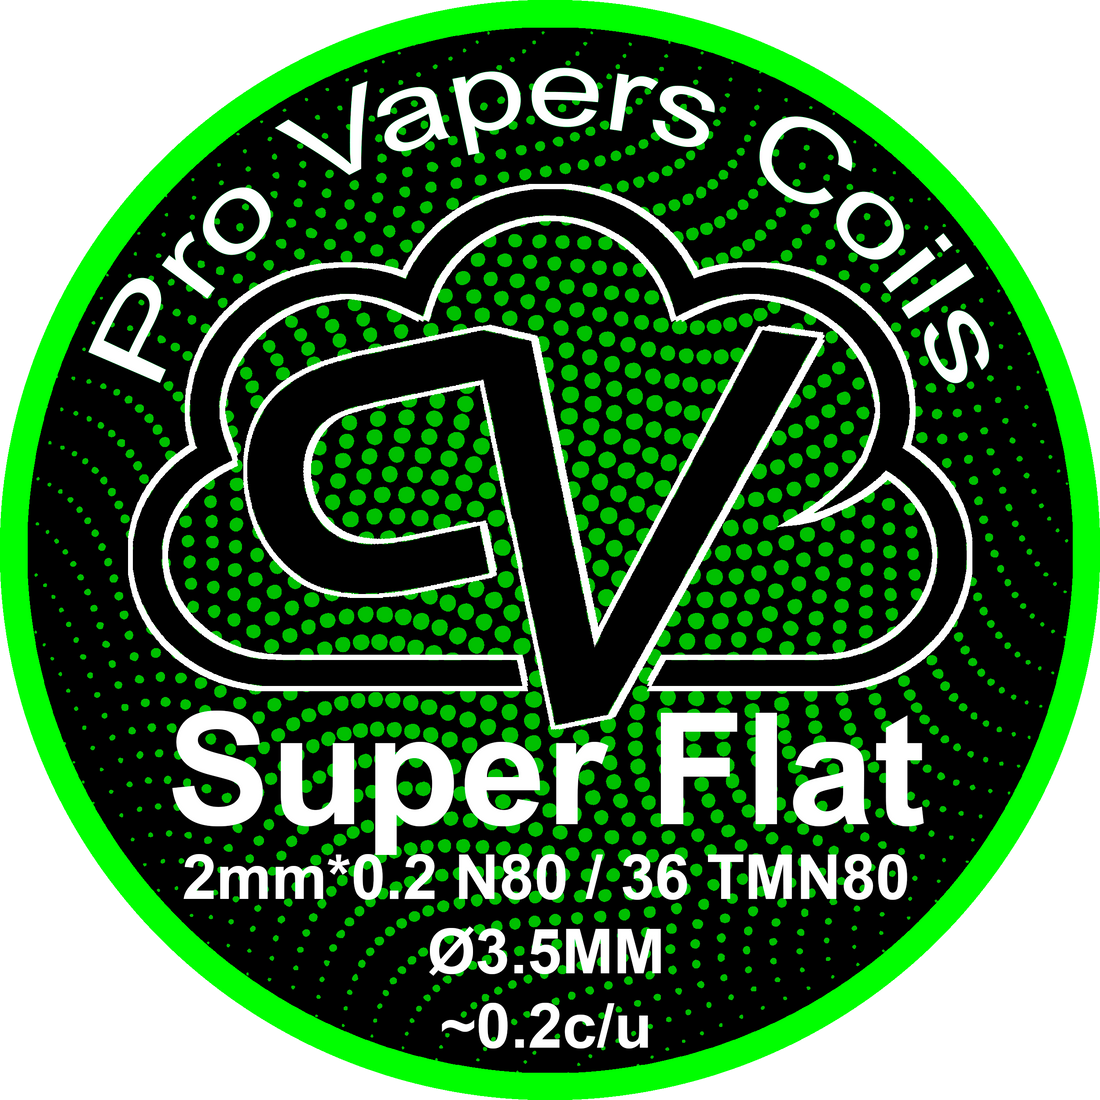 Super Flat - Pro Vapers - Resistencias Artesanales - DIY VAPE SHOP | RA-PVC-SF-01